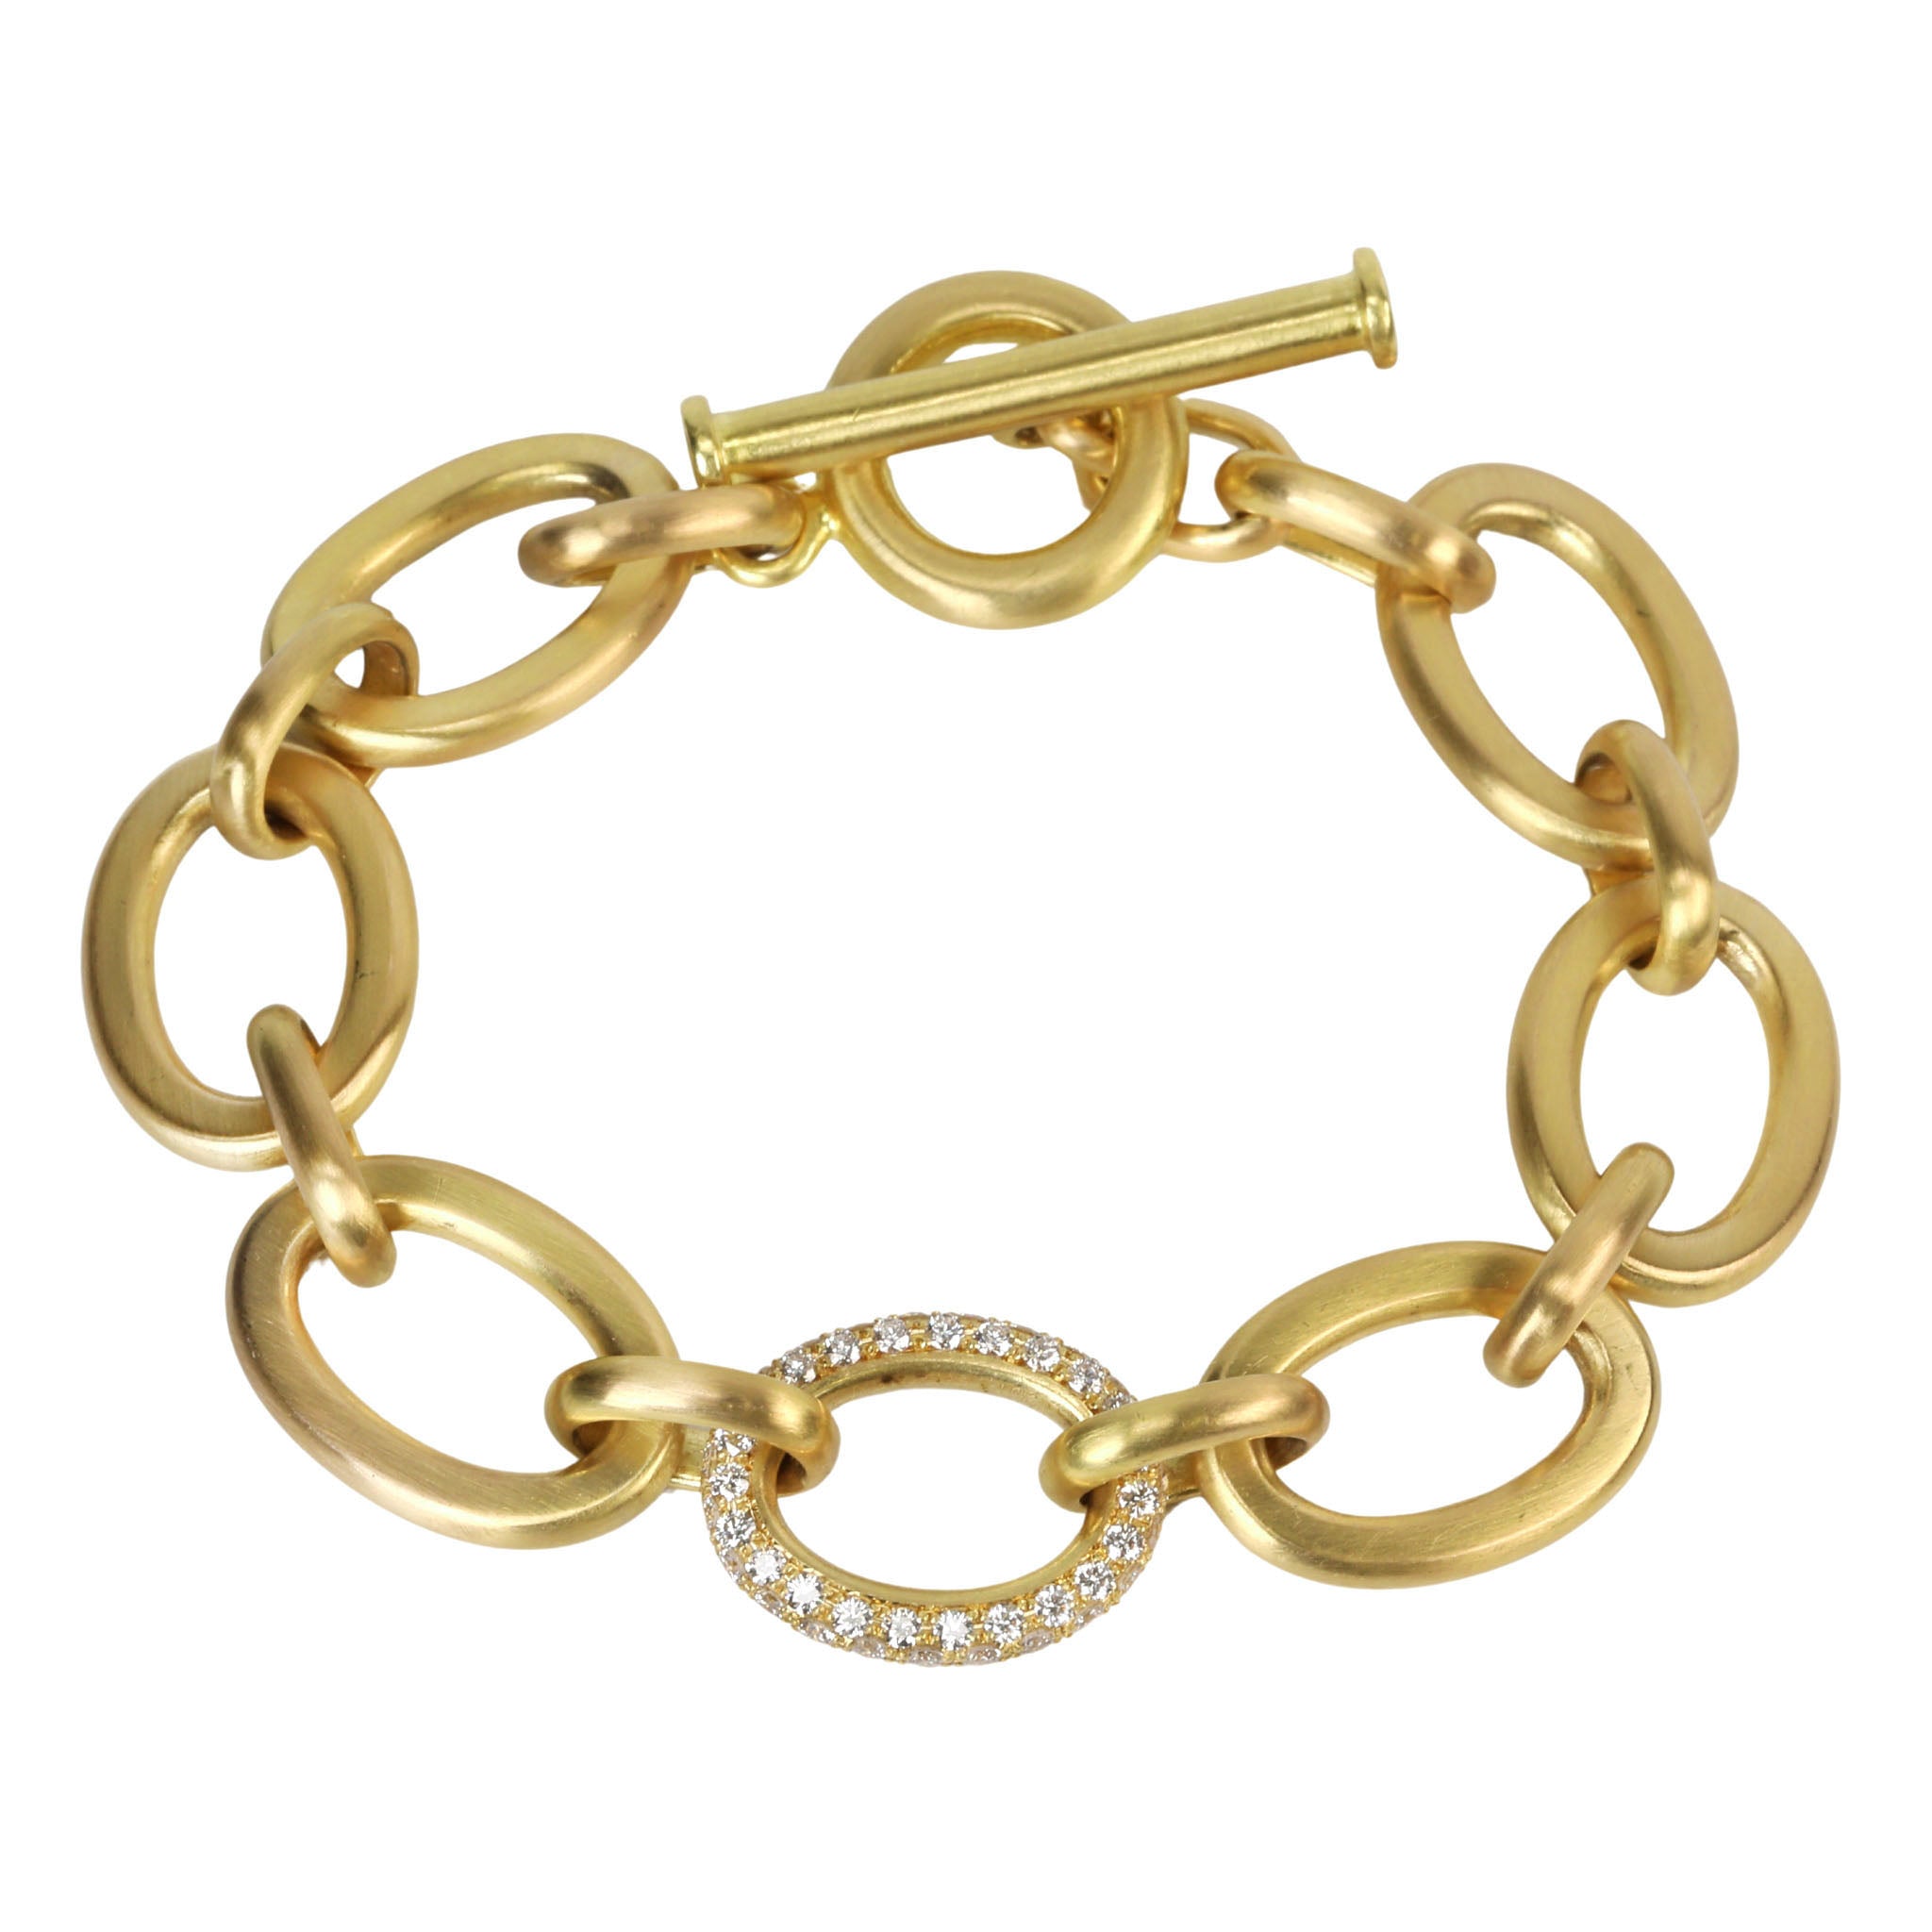 Kendra Scott Chain Link Bracelet in Vintage Gold | The Summit at Fritz Farm